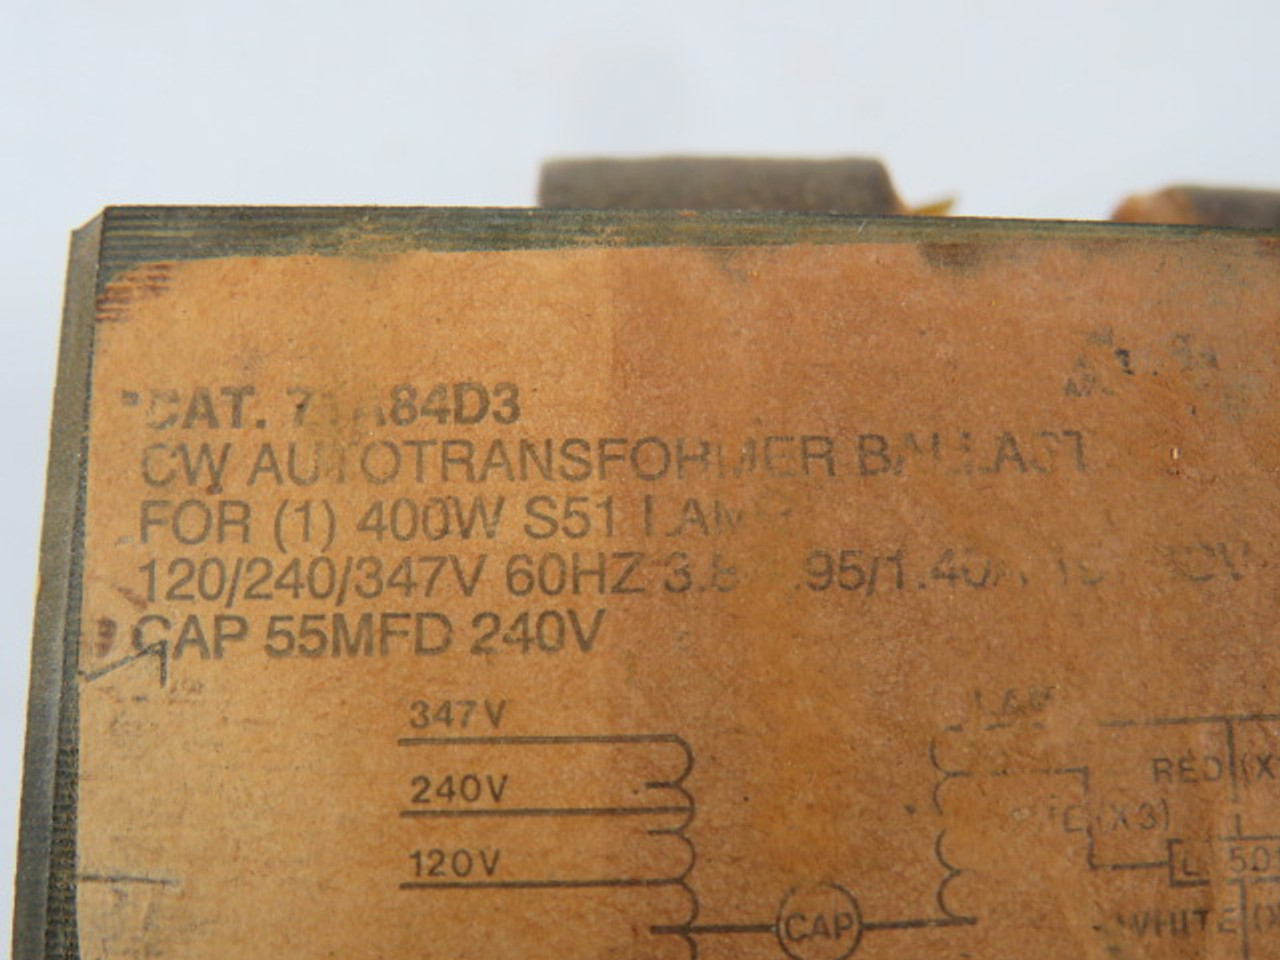 Advance 71A84D3 Autotransformer Ballast 400W 120/240/347V 60Hz USED